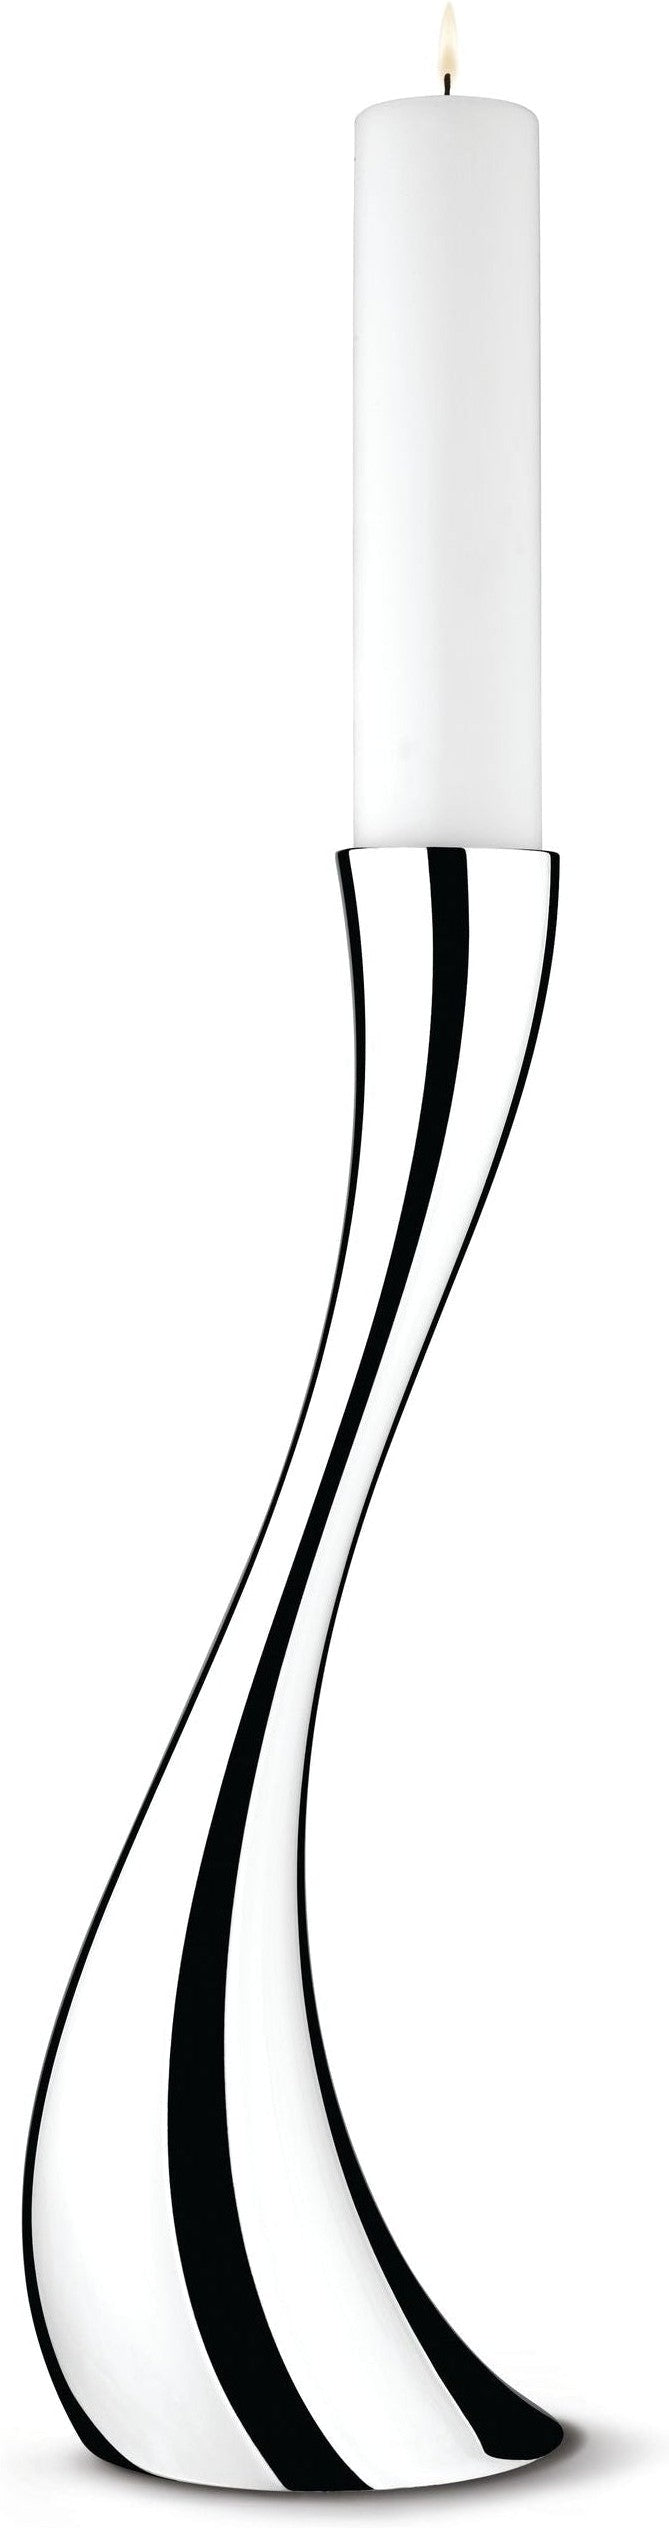 Georg Jensen Cobra golvljushållare svart/vitt, 50 cm